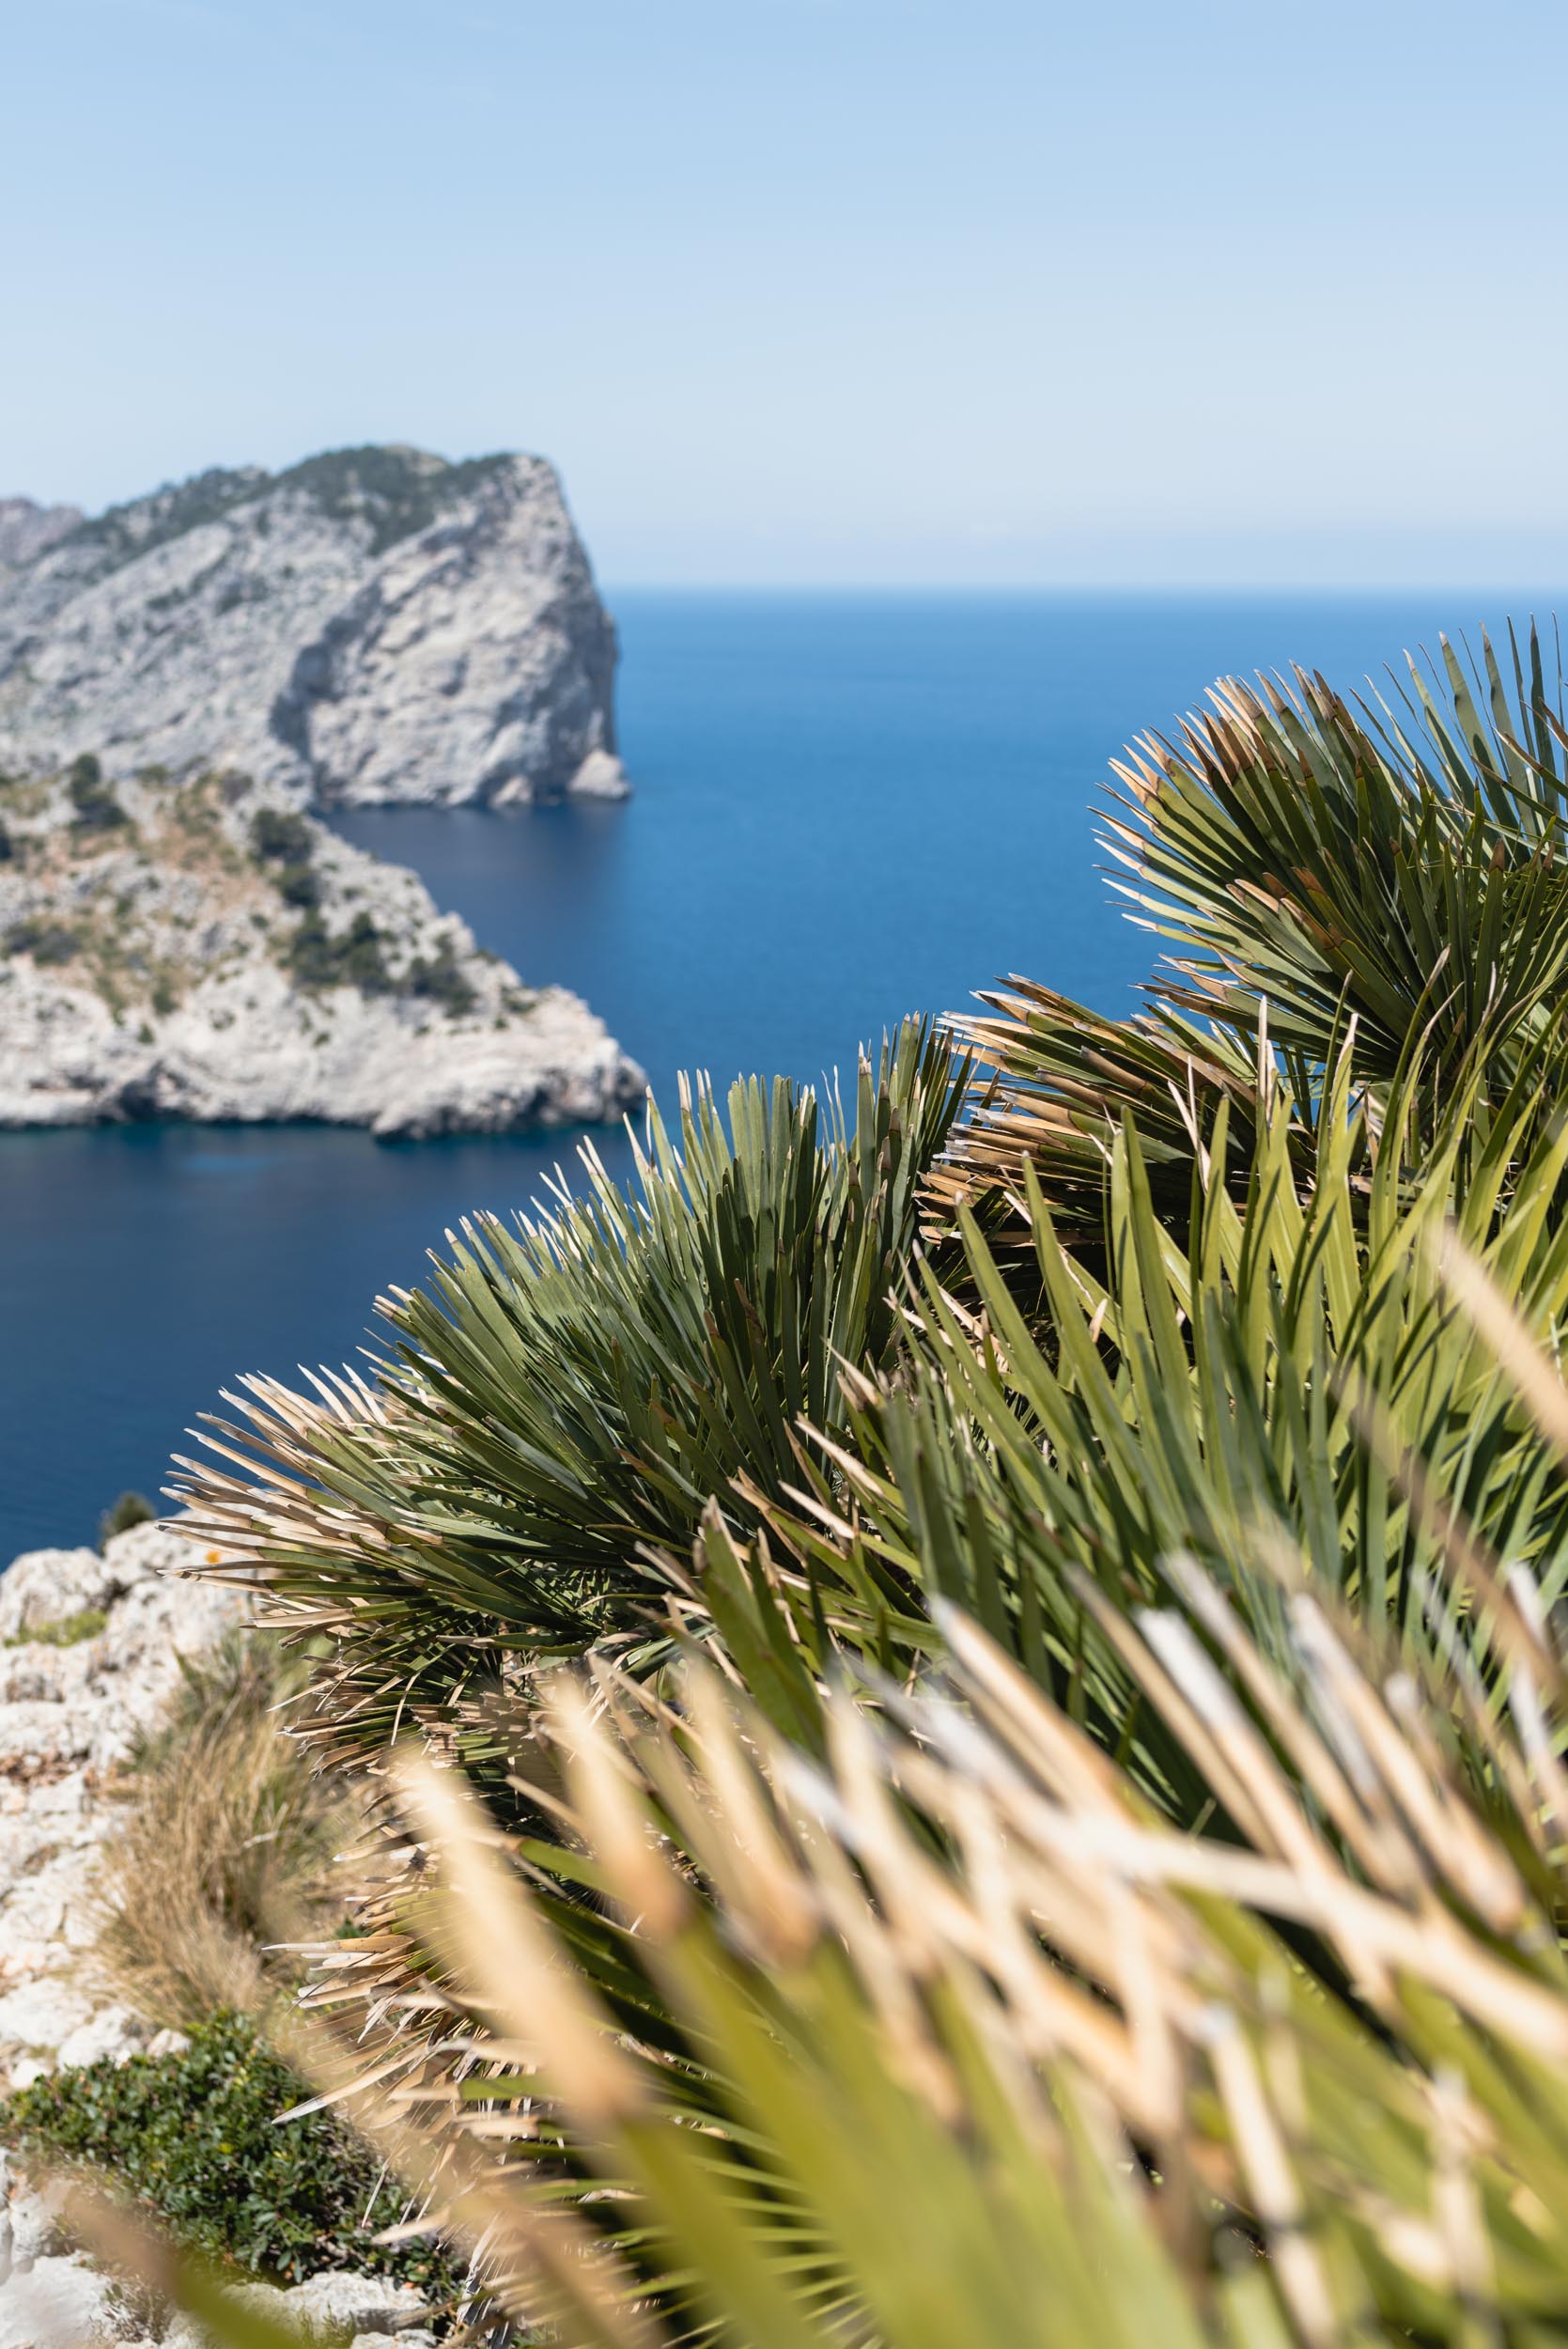 Mirador lookout Mallorca with palm grass